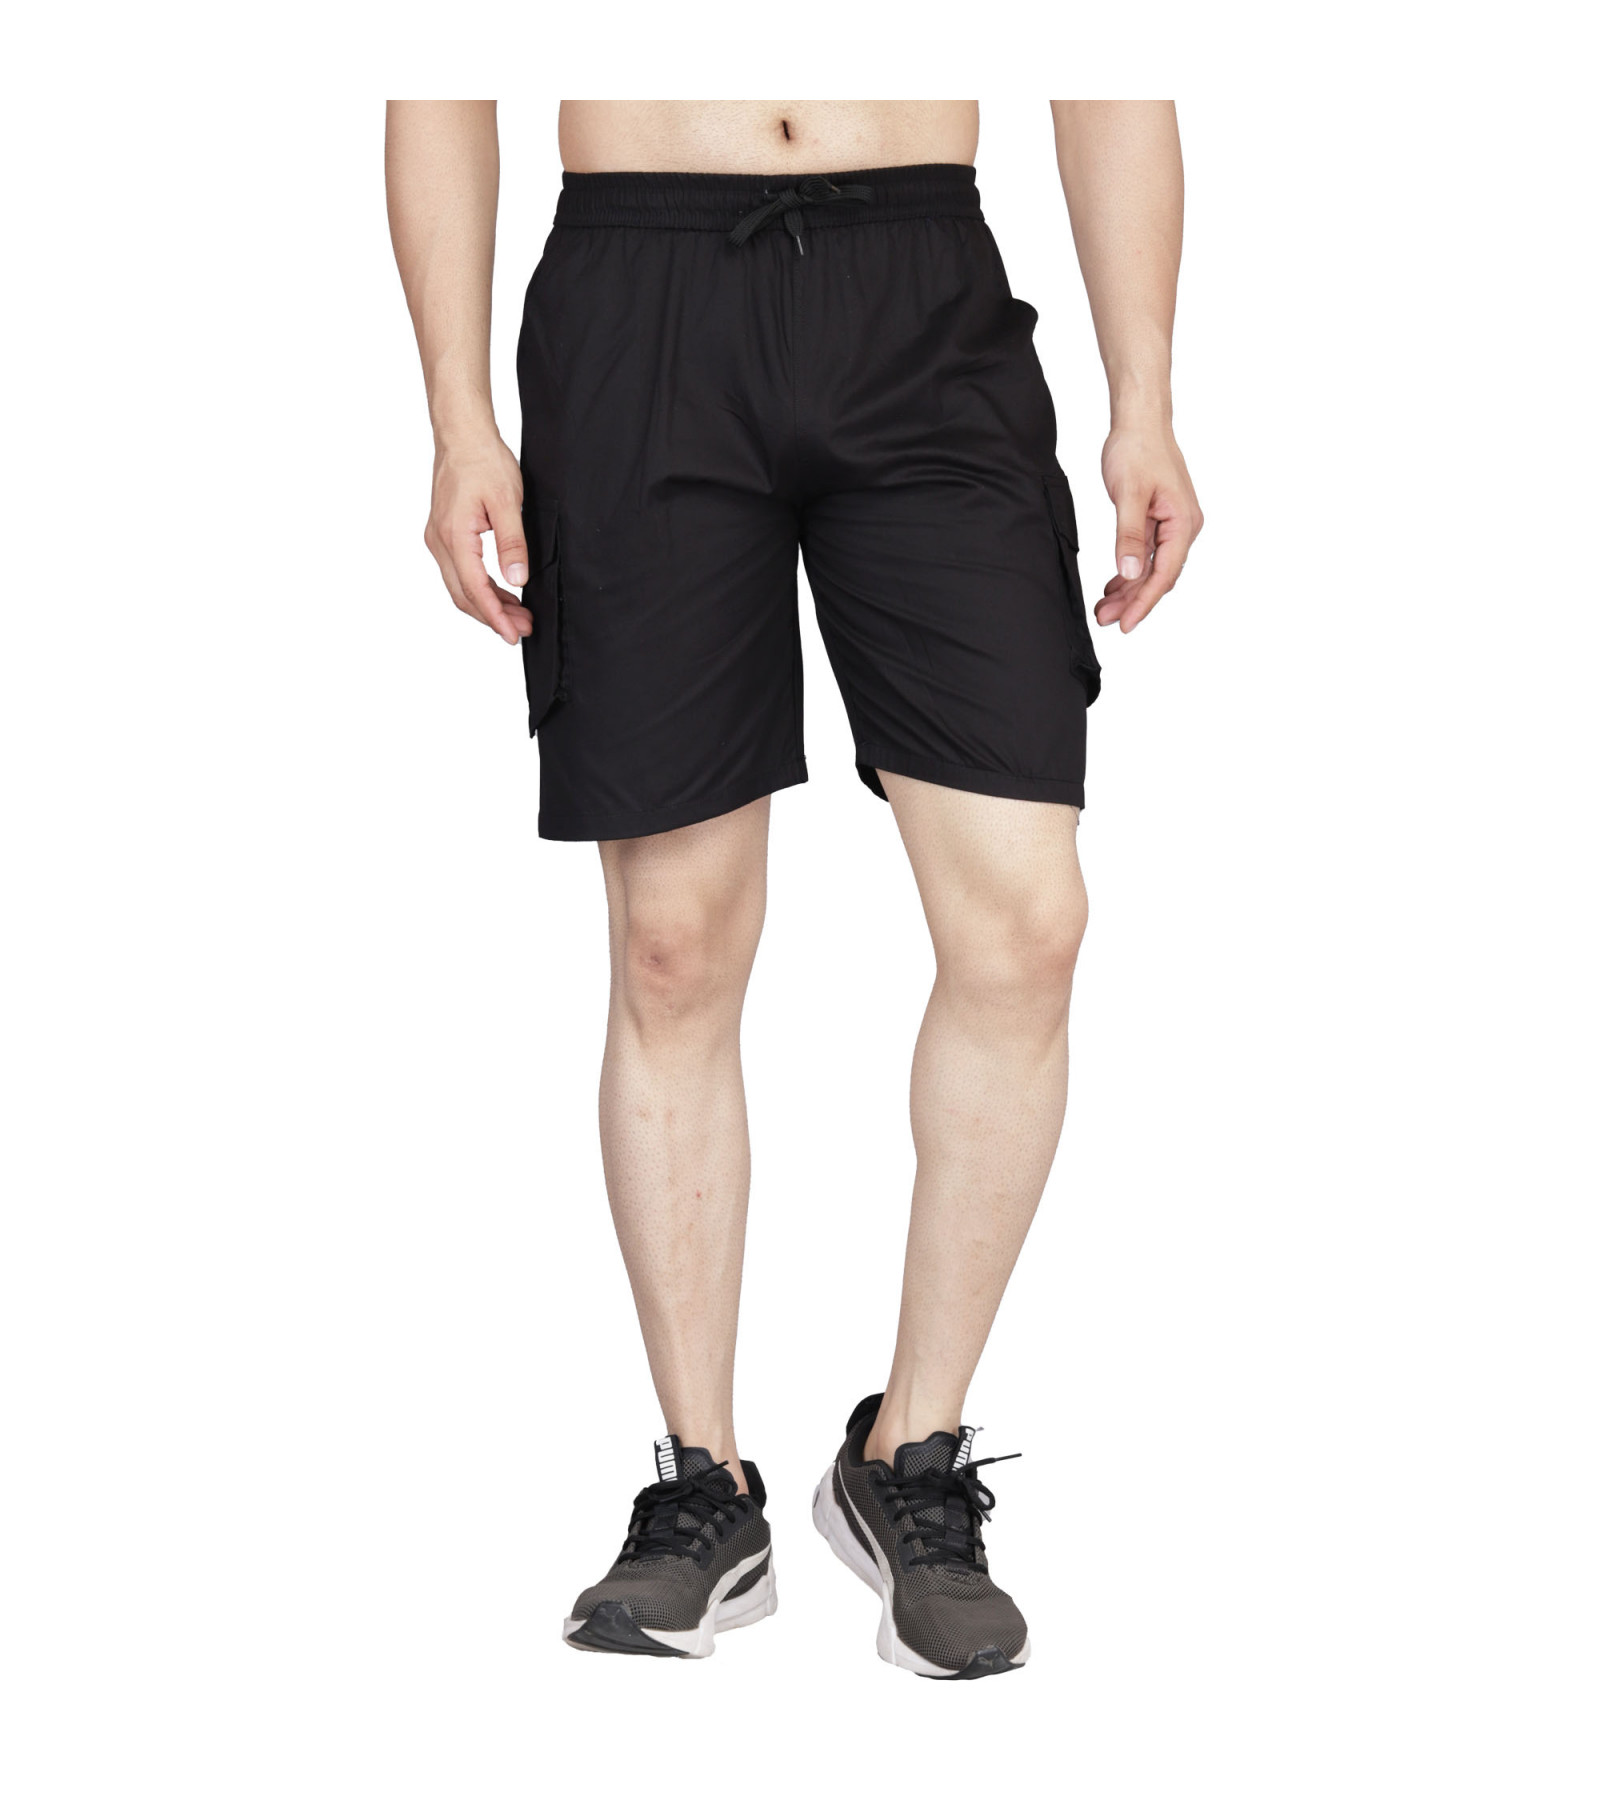 Abaranji Stylish Unique  Men's Half shorts